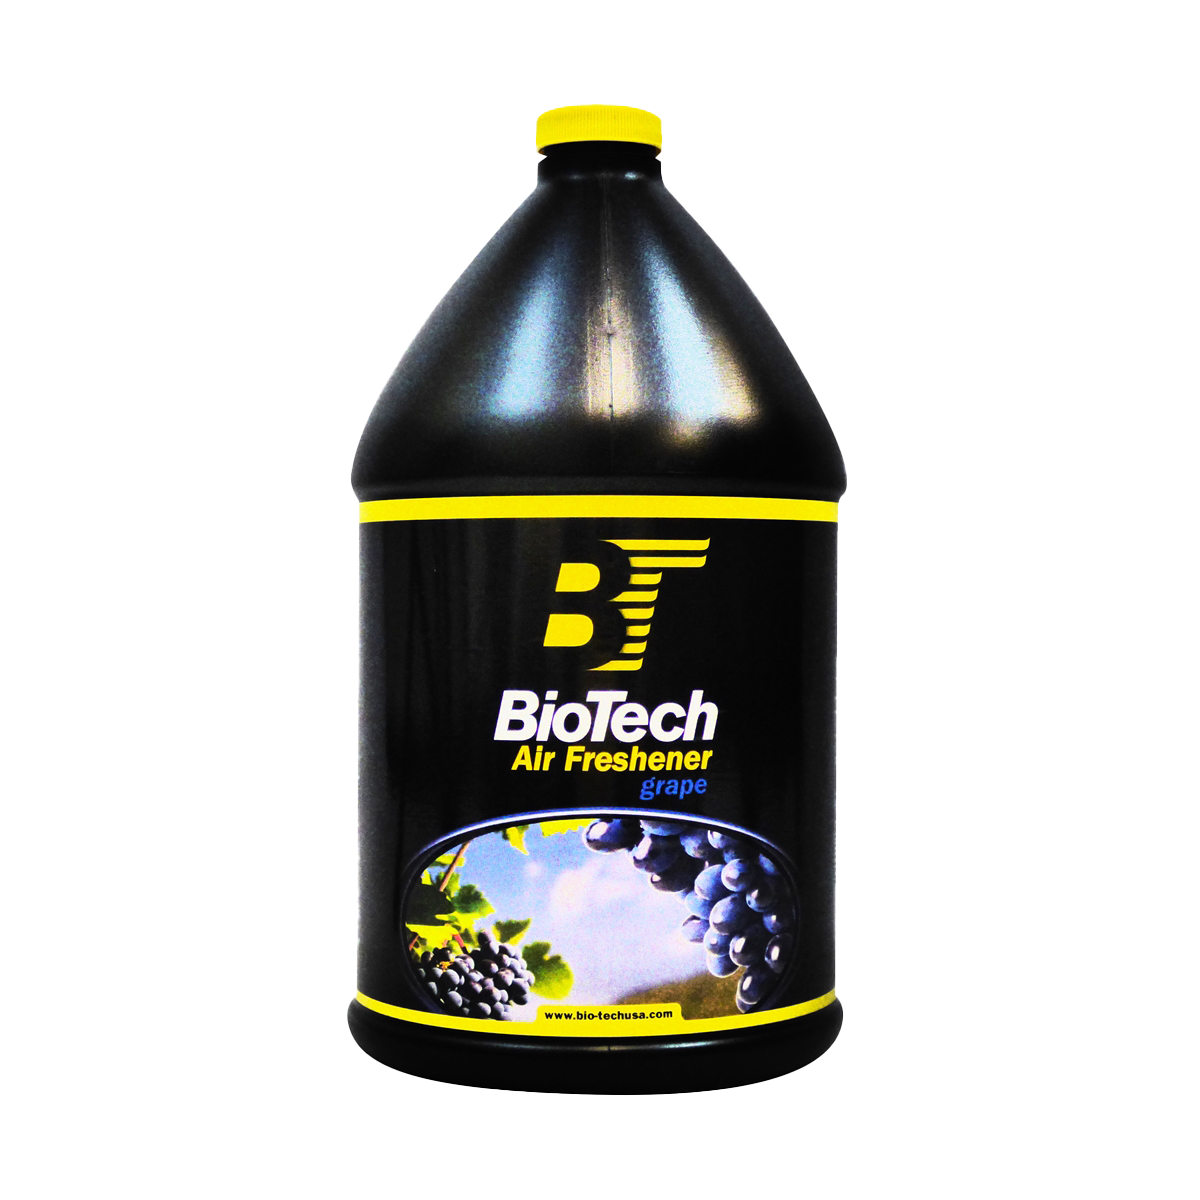 Biotech Air Freshener Grape Scent